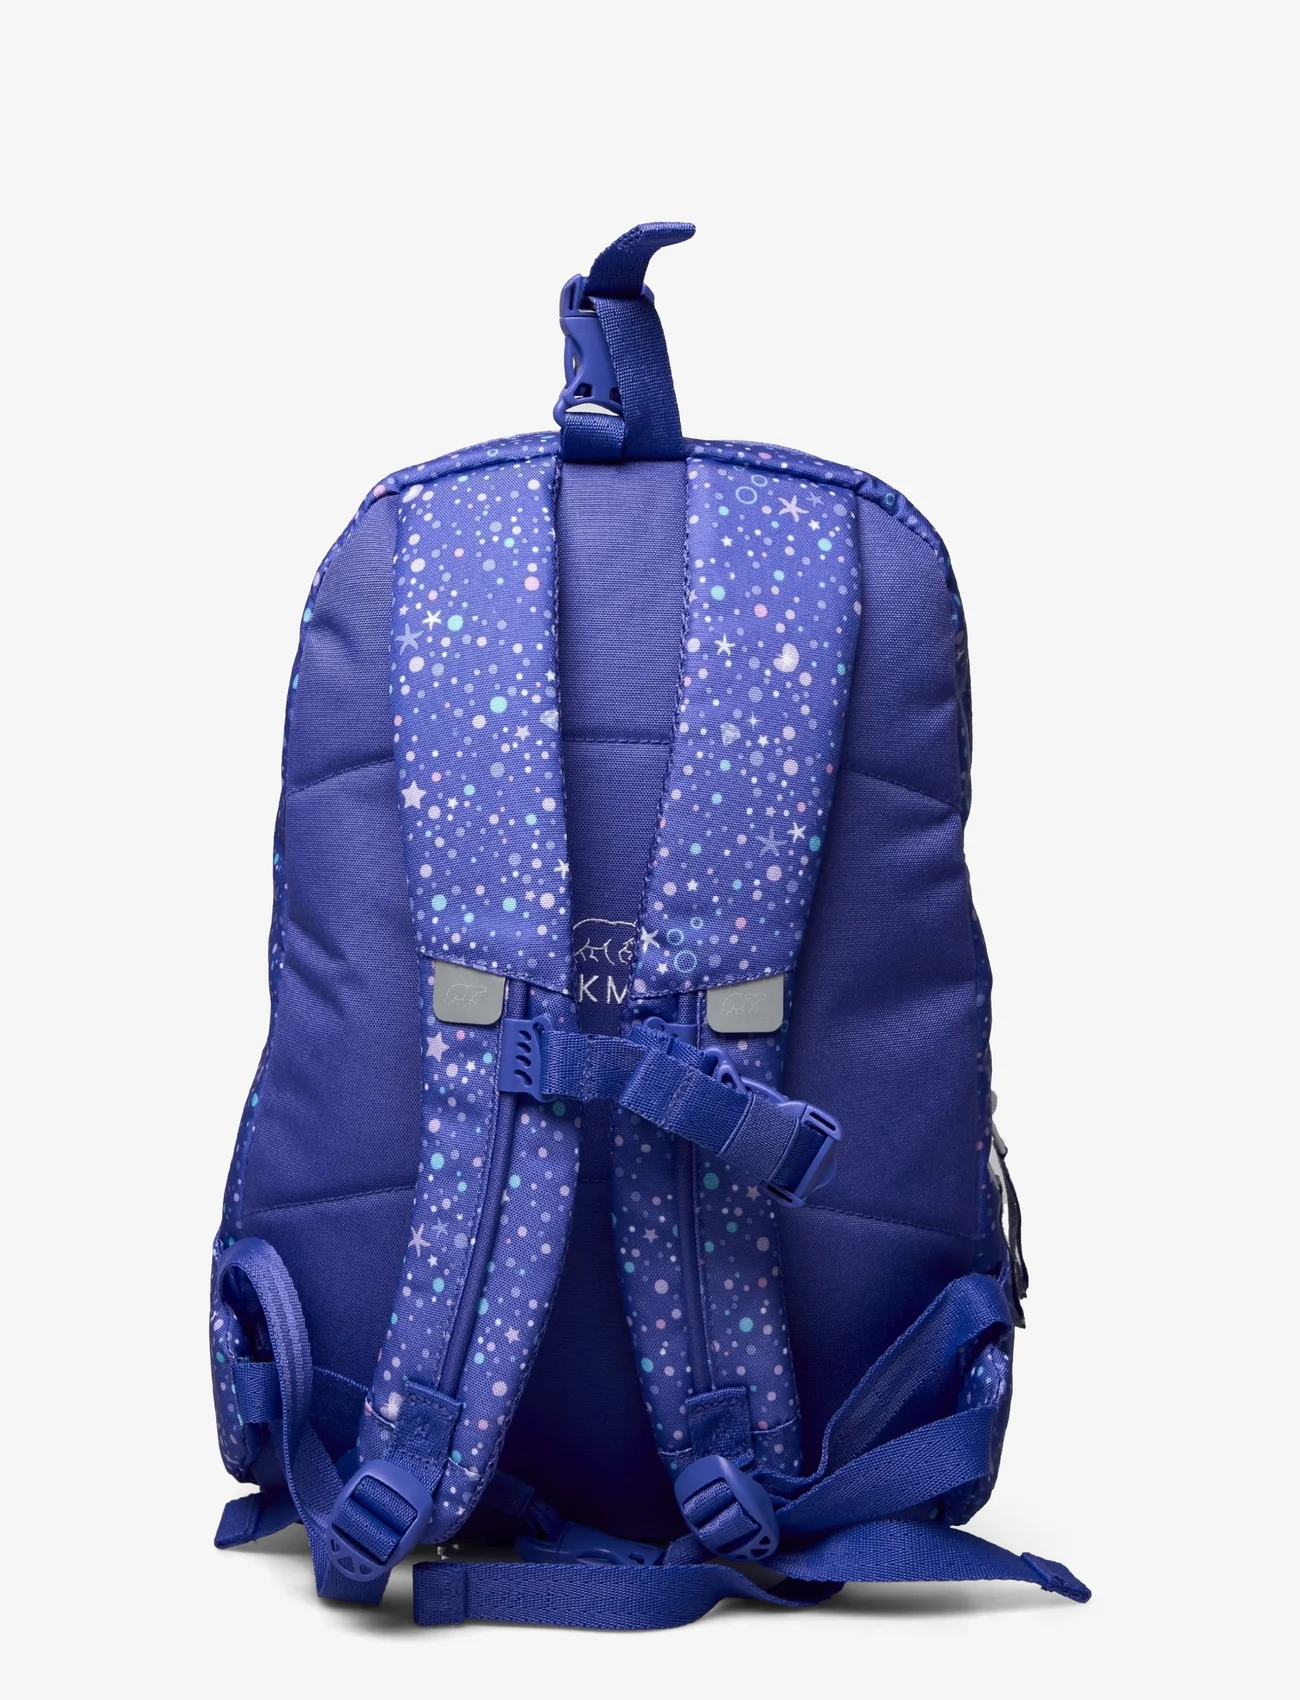 Beckmann of Norway - Gym/Hiking backpack 12L - Aqua Girl - summer savings - purple - 1